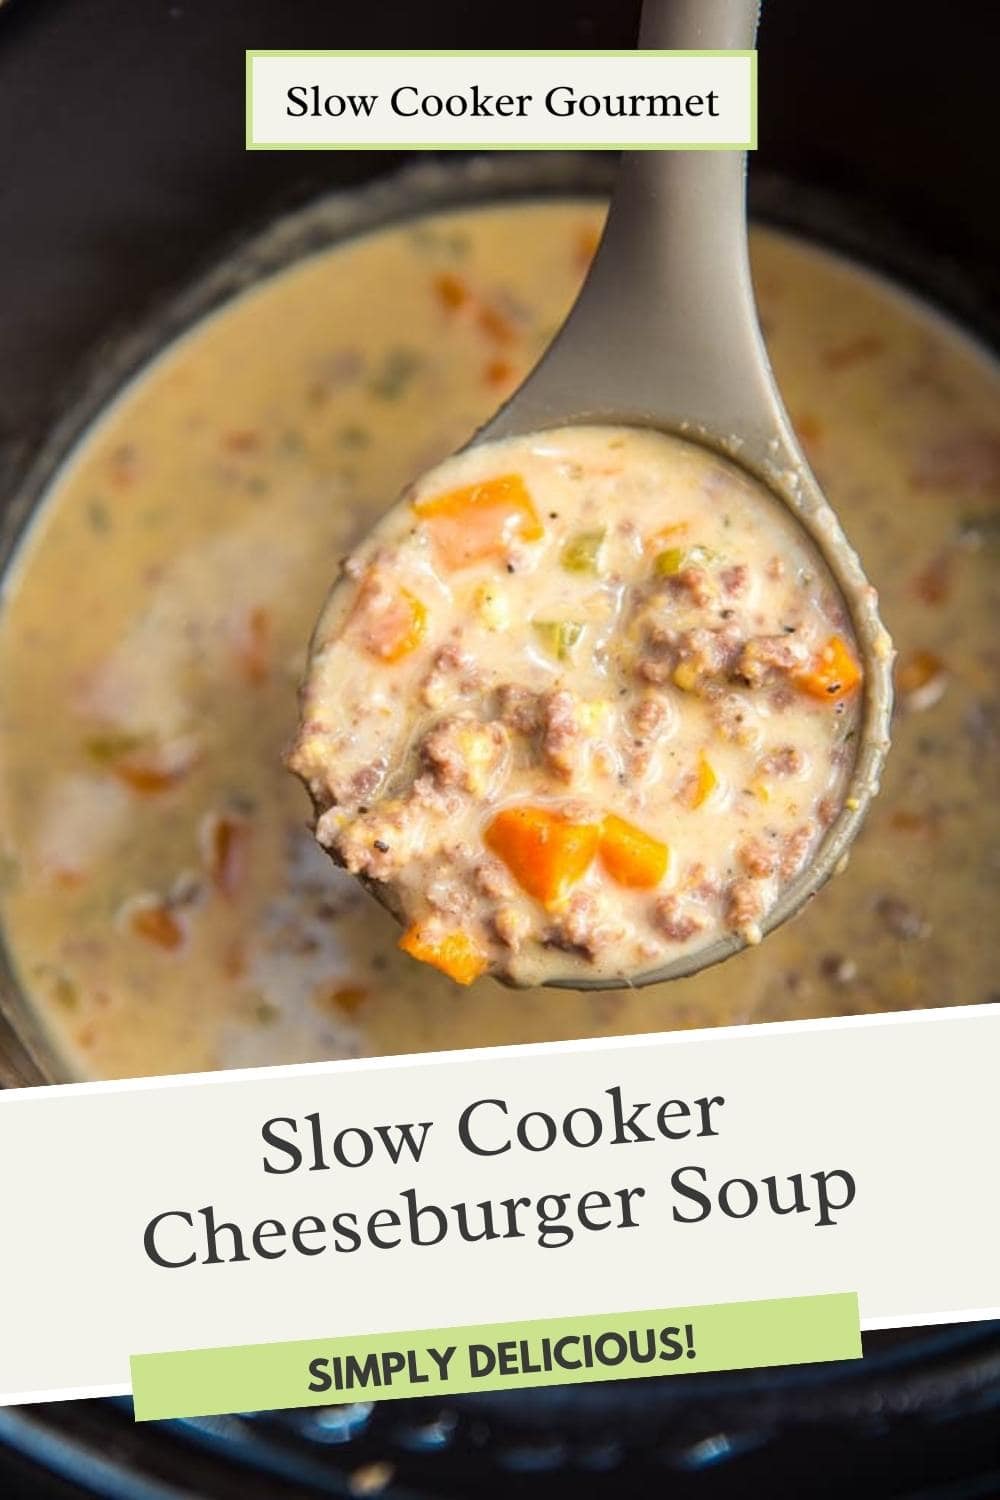 Slow Cooker Cheeseburger Soup Recipe - Slow Cooker Gourmet